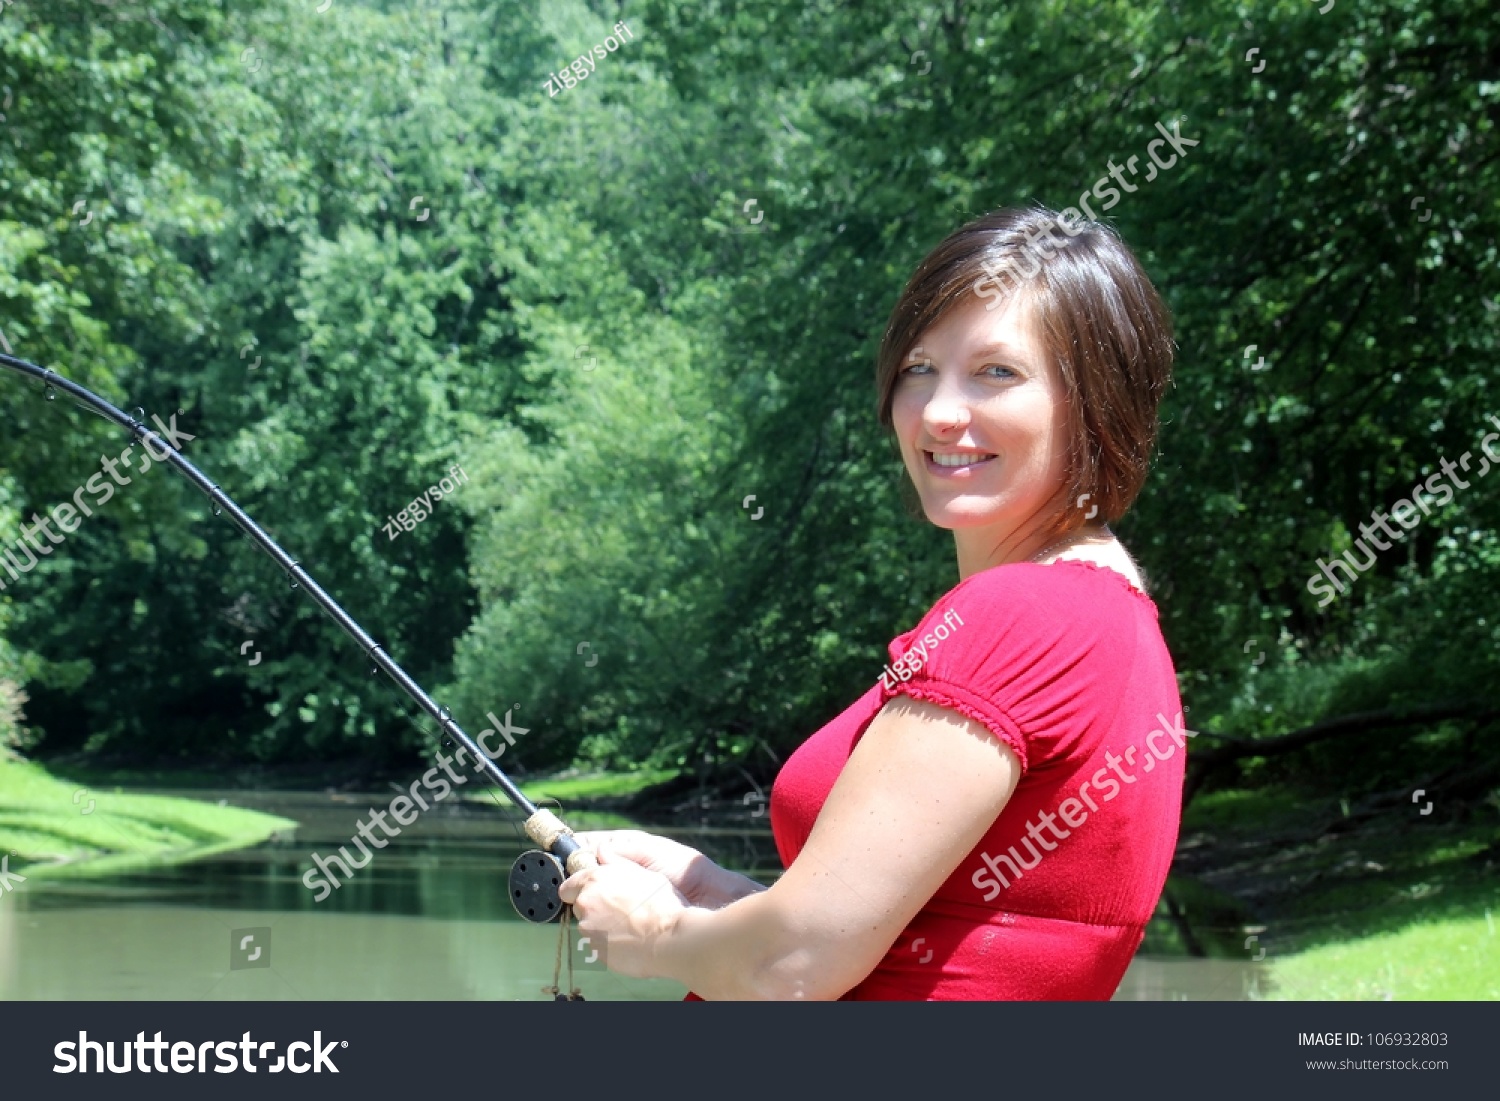 dian lu recommends woman pretty woman fishing pic